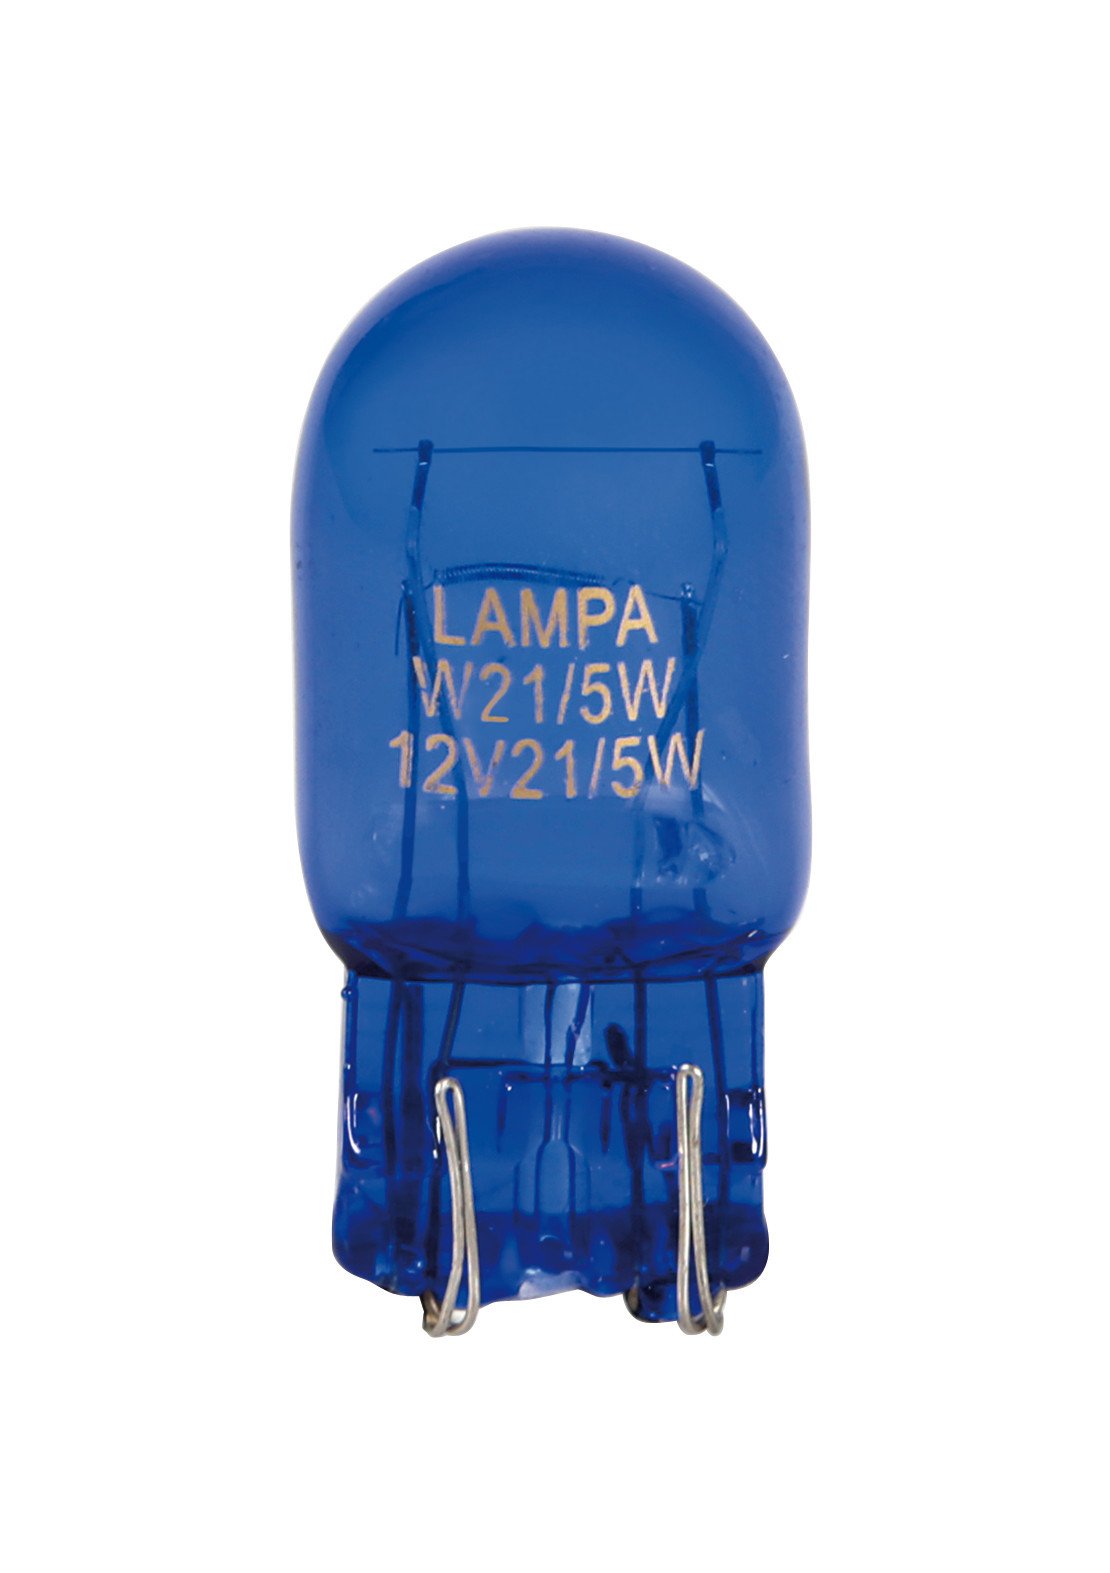 Lampa 58075 Blue-Dyed Lampe, 12 V, 21/5 W von Lampa